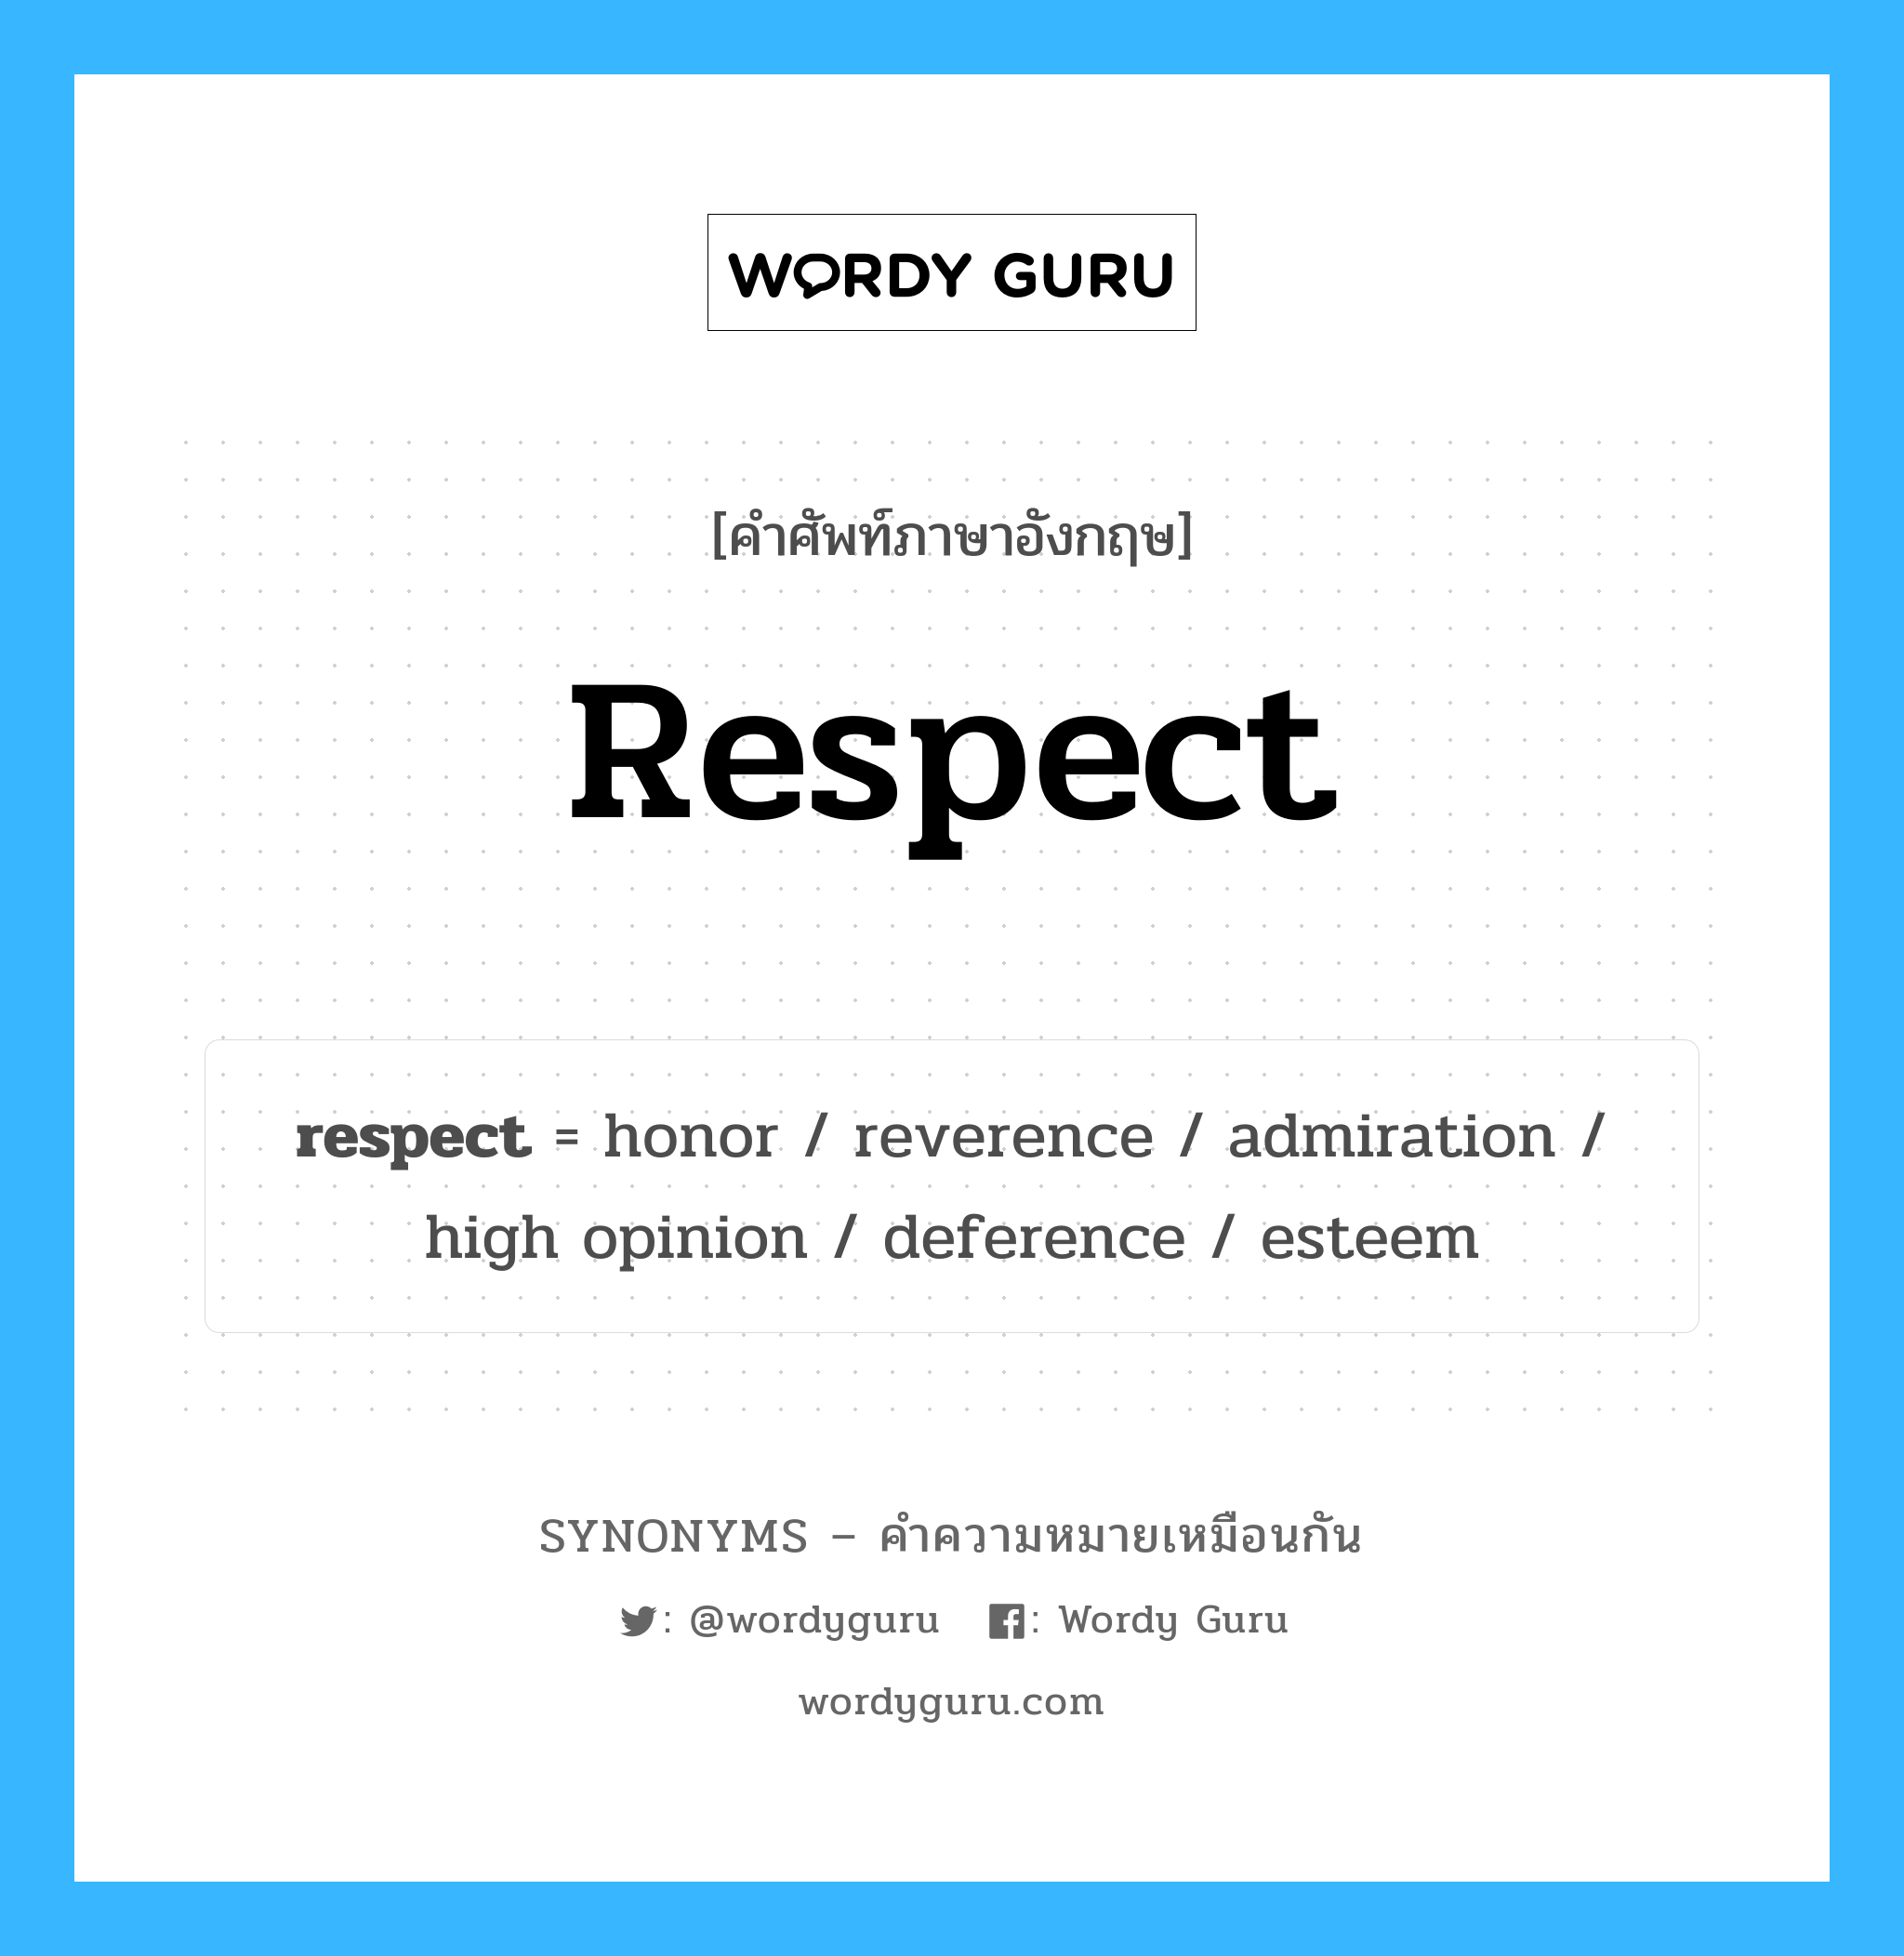 reverence เป็นหนึ่งใน respect และมีคำอื่น ๆ อีกดังนี้, คำศัพท์ภาษาอังกฤษ reverence ความหมายคล้ายกันกับ respect แปลว่า ความเคารพ หมวด respect